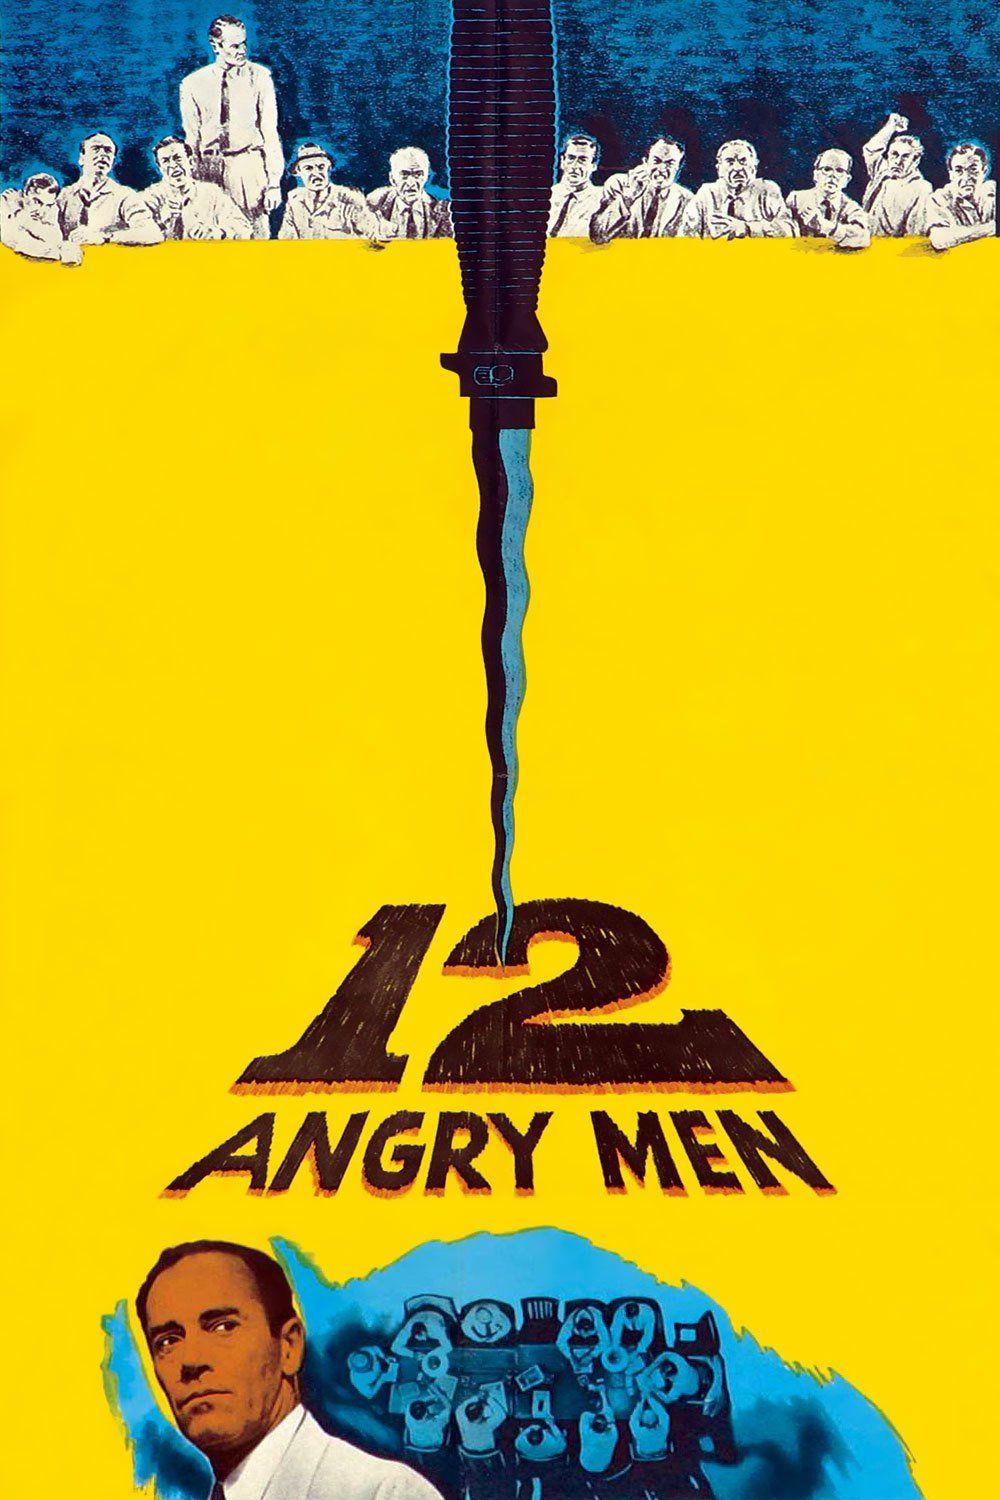 Angry Men at the Movies